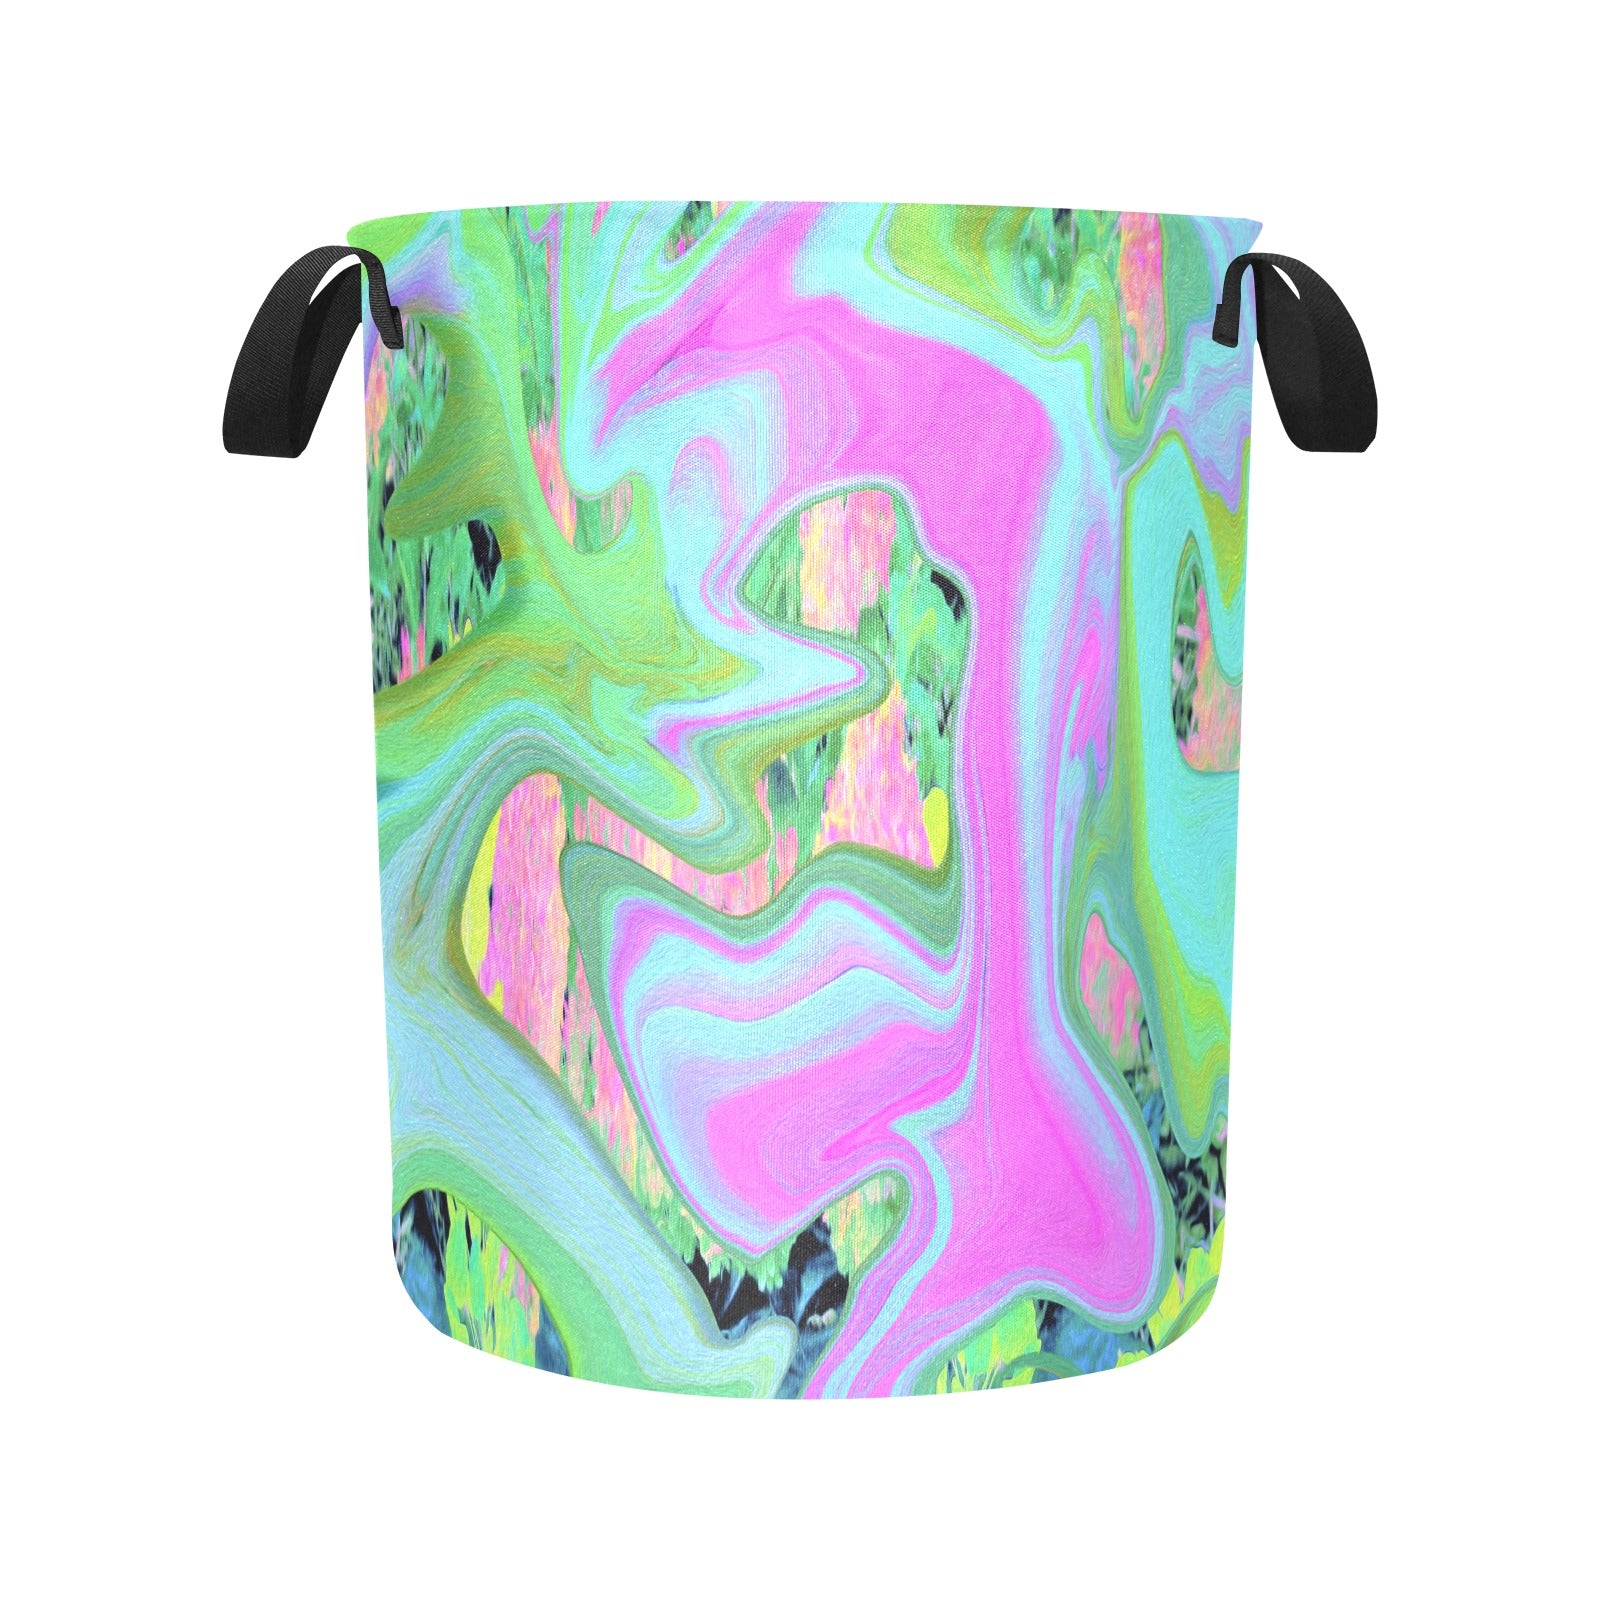 Fabric Laundry Basket with Handles, Retro Pink and Light Blue Liquid Art on Hydrangea